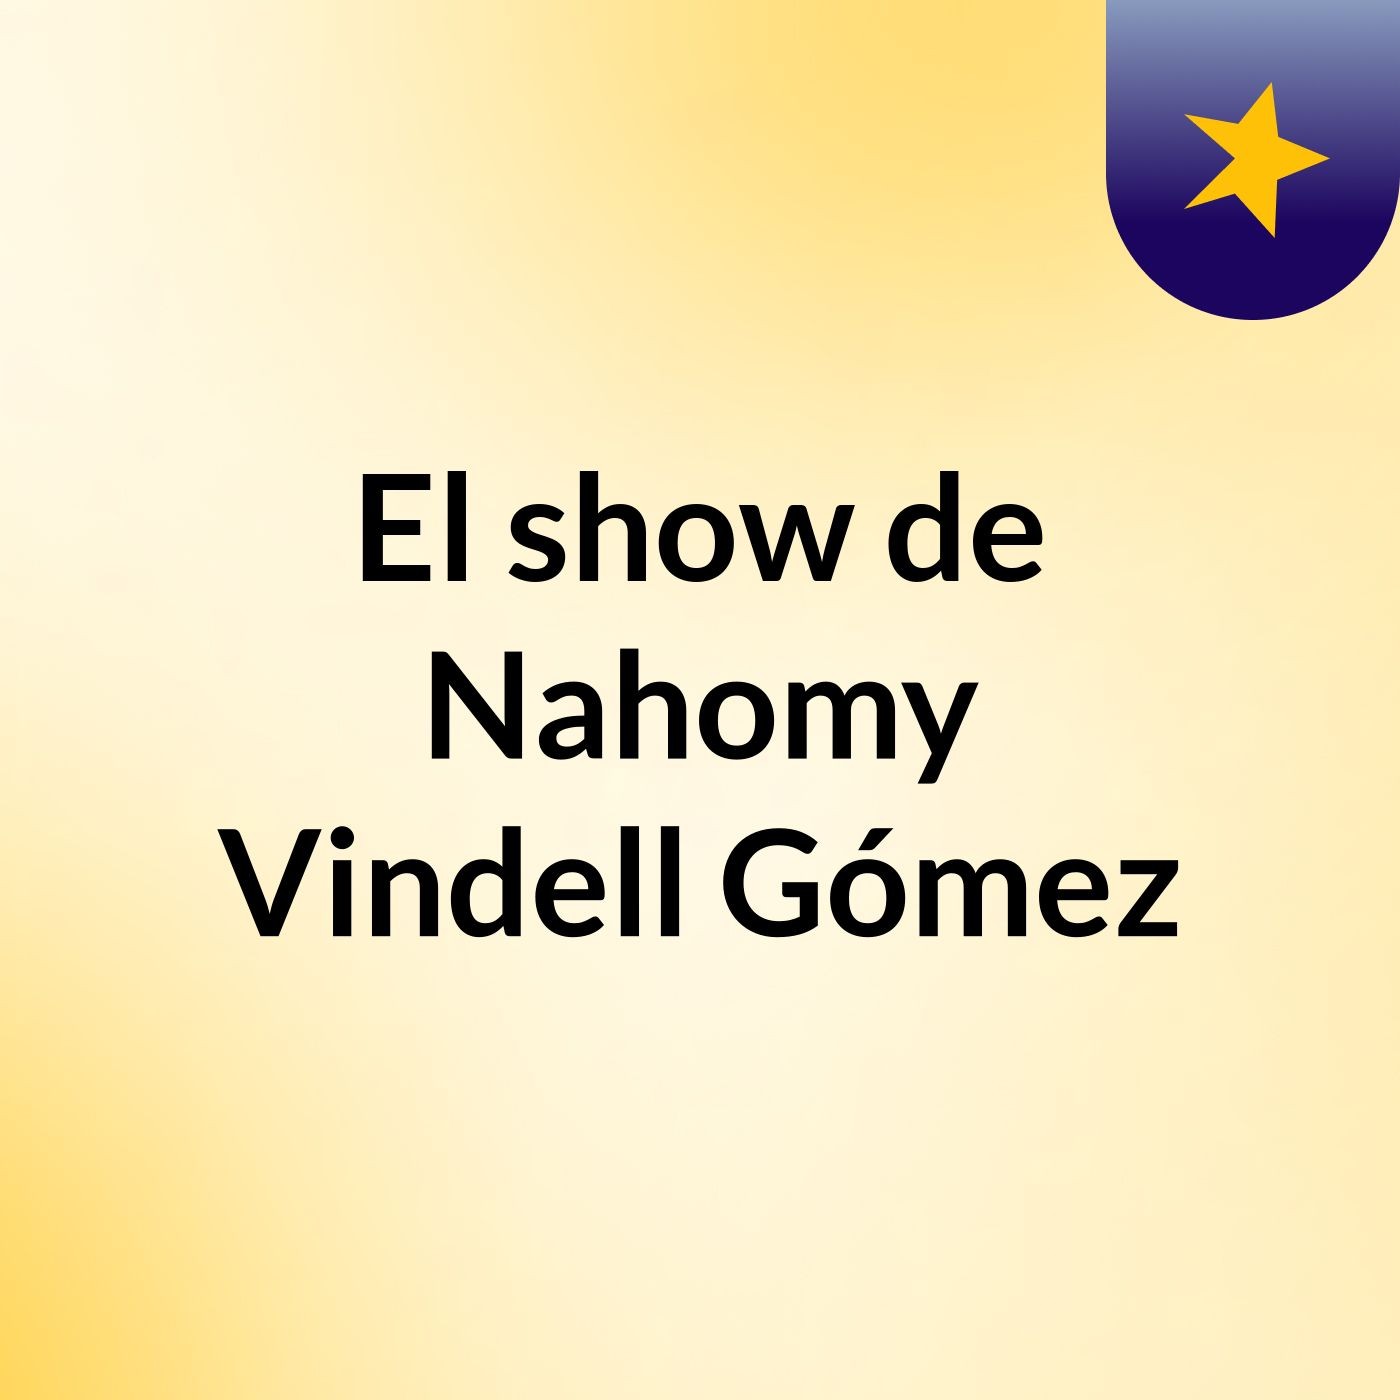 El show de Nahomy Vindell Gómez